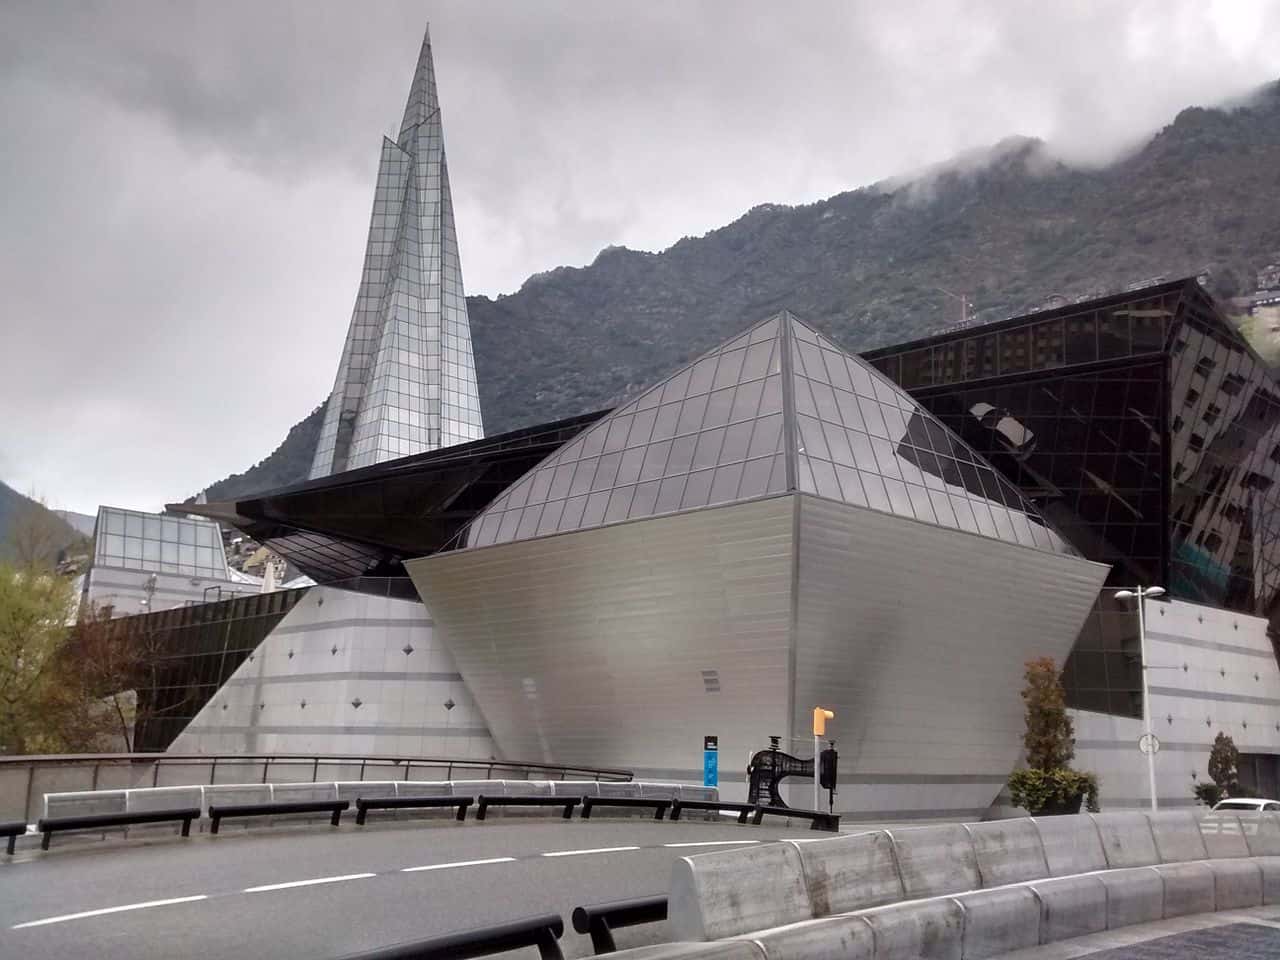 Tallest building of Andorra